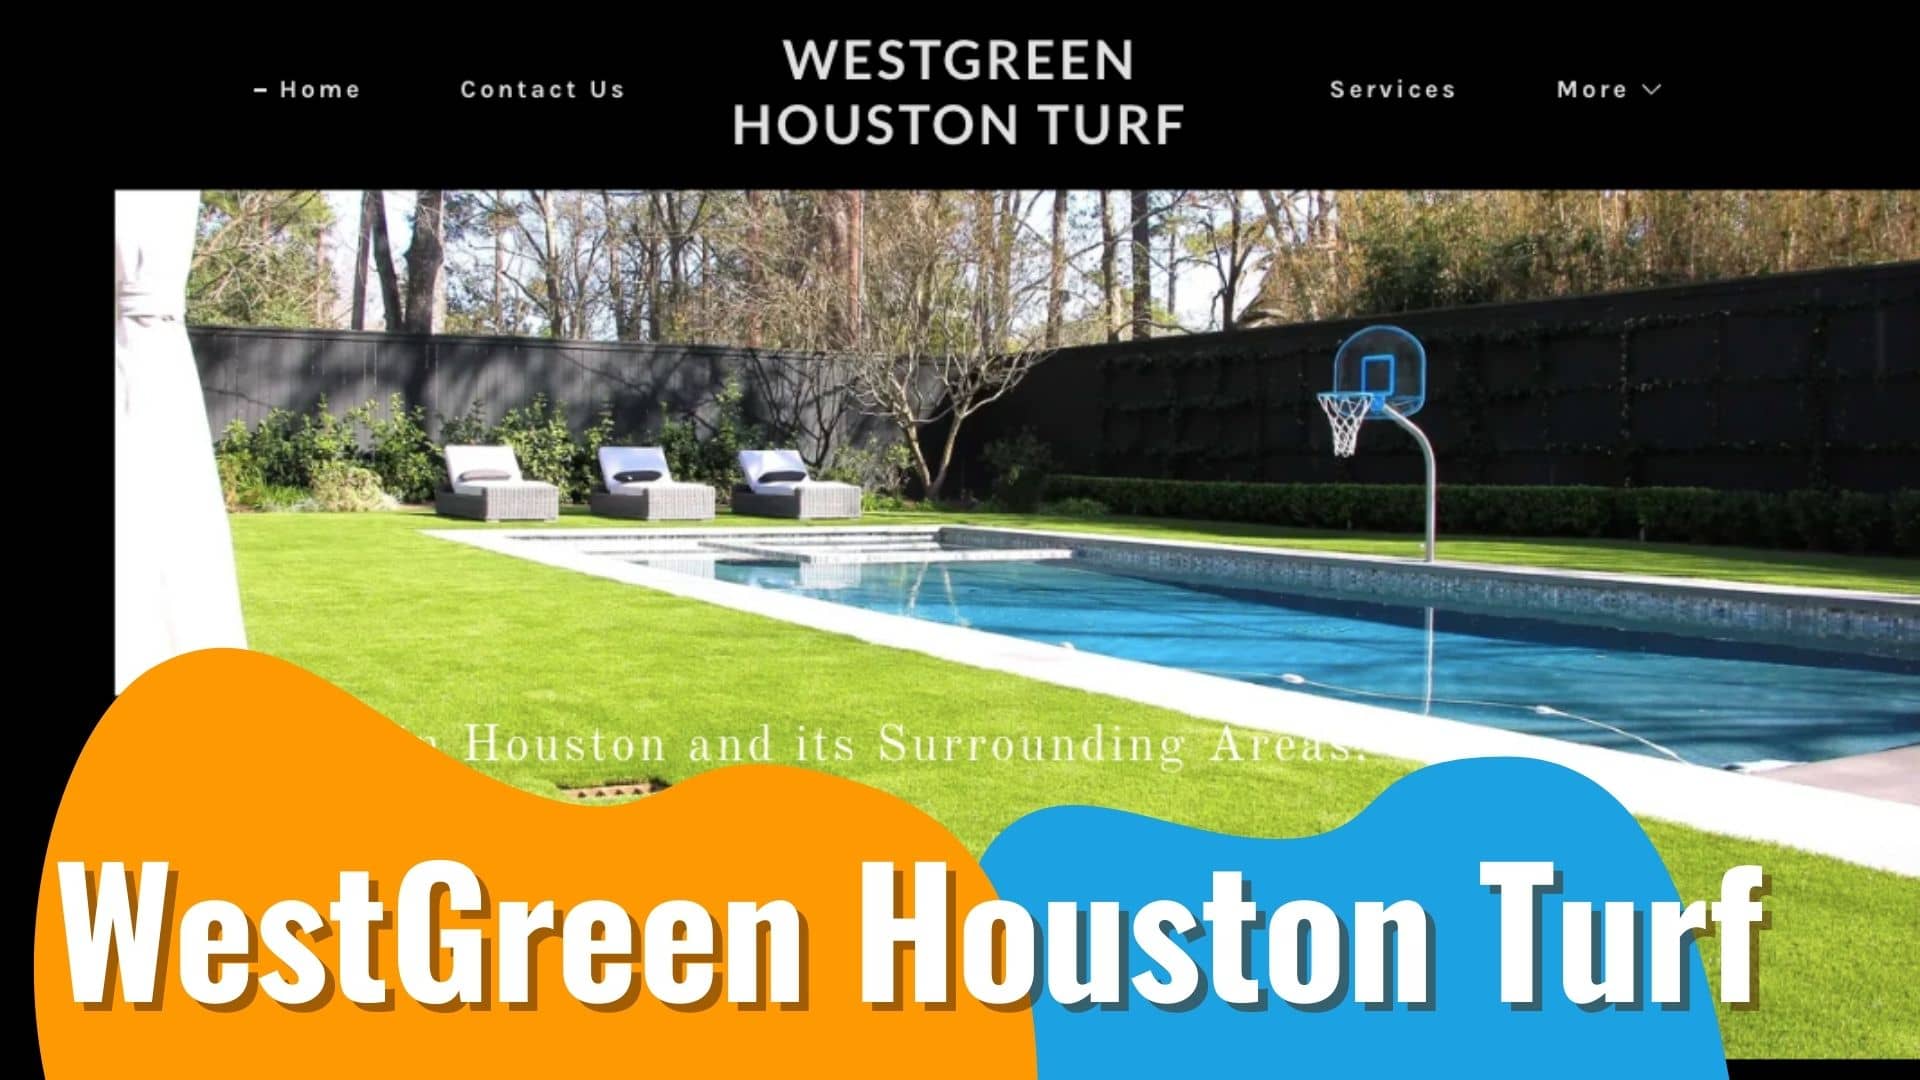 WestGreen Houston Turf